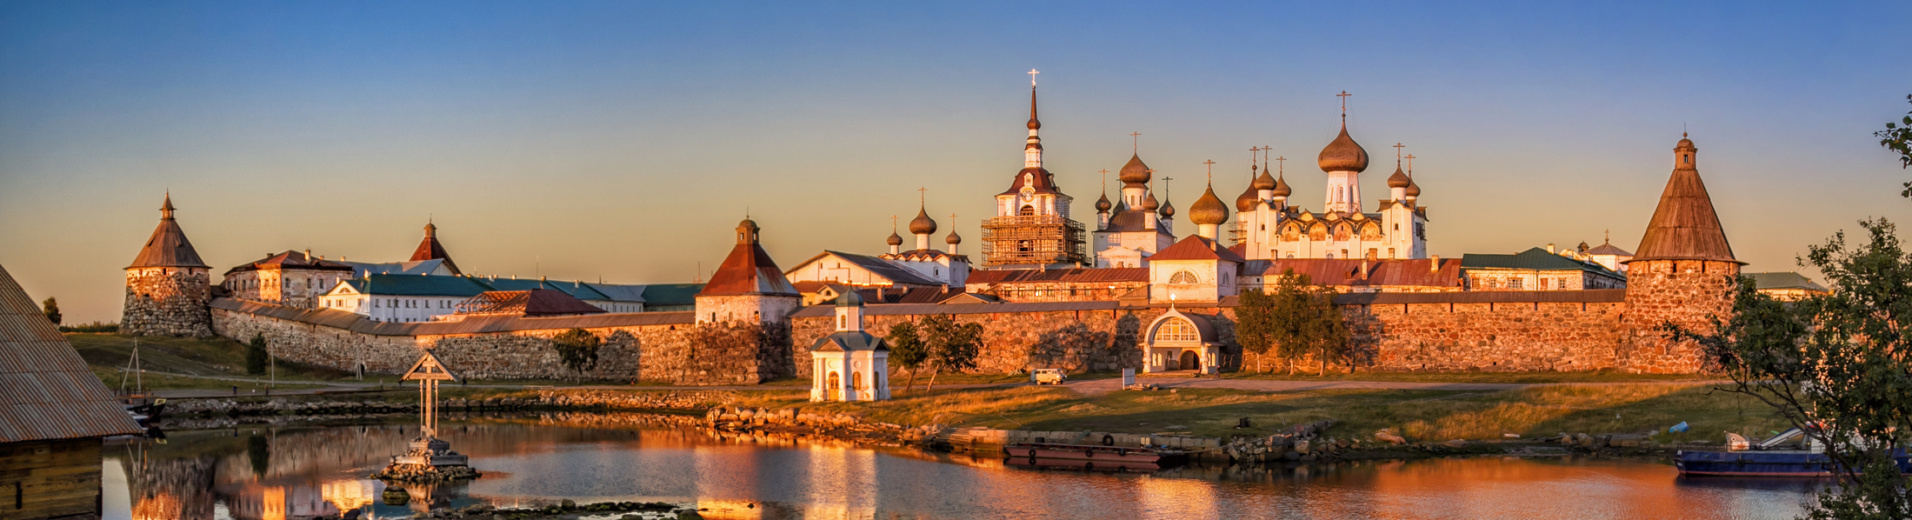 Monastère Solovetski, Carélie, Russie